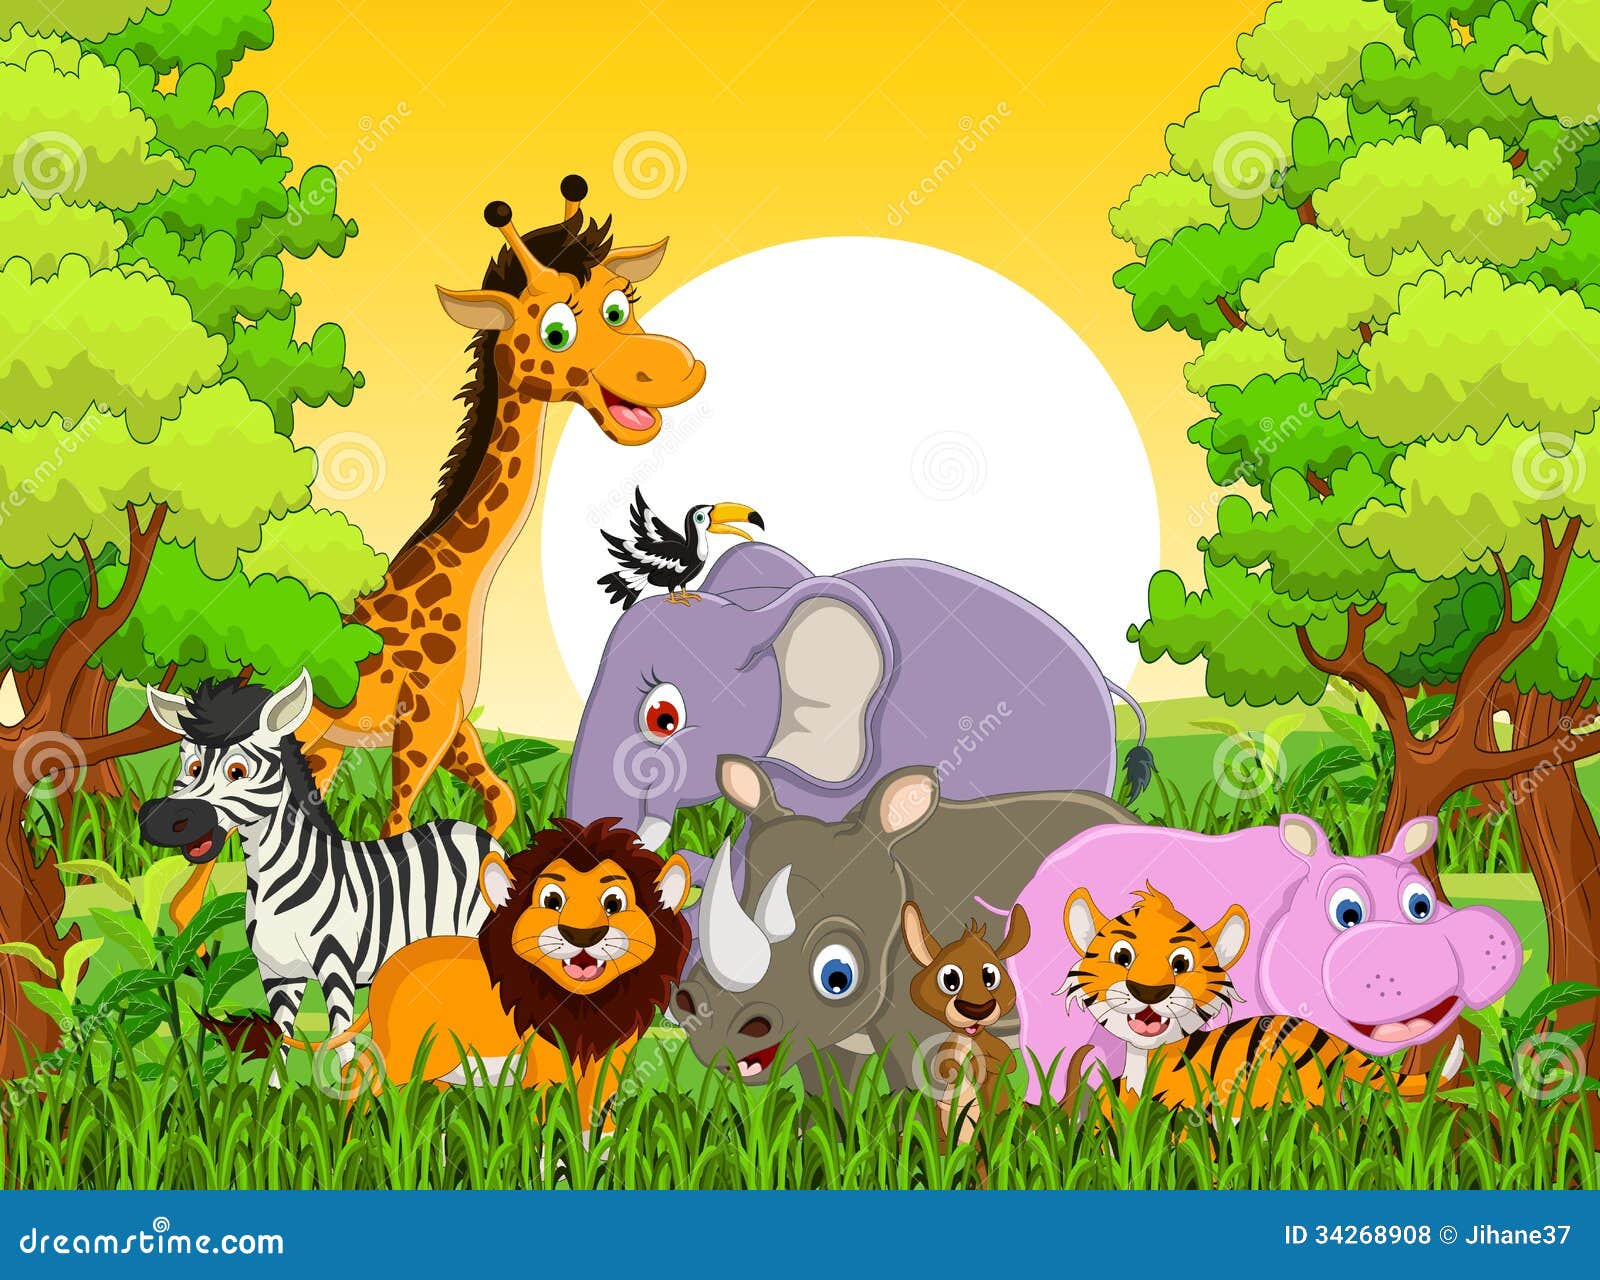 Cute Animal Wildlife Cartoon with Forest Background Stock Illustration -  Illustration of africa, giraffe: 34268908